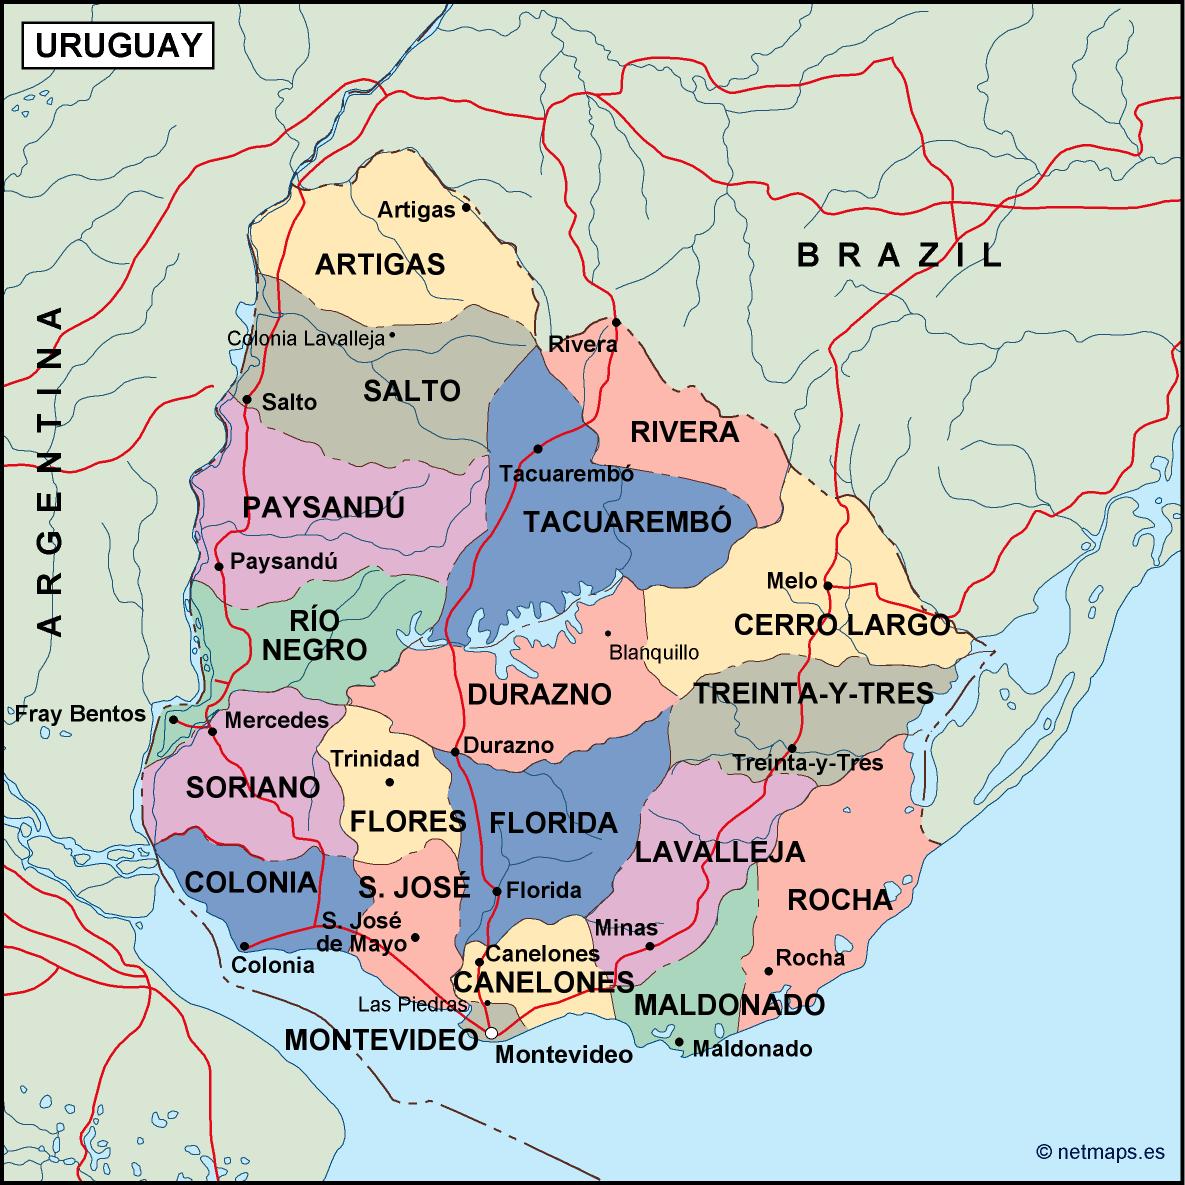 uruguay political map. Eps Illustrator Map | Vector World Maps